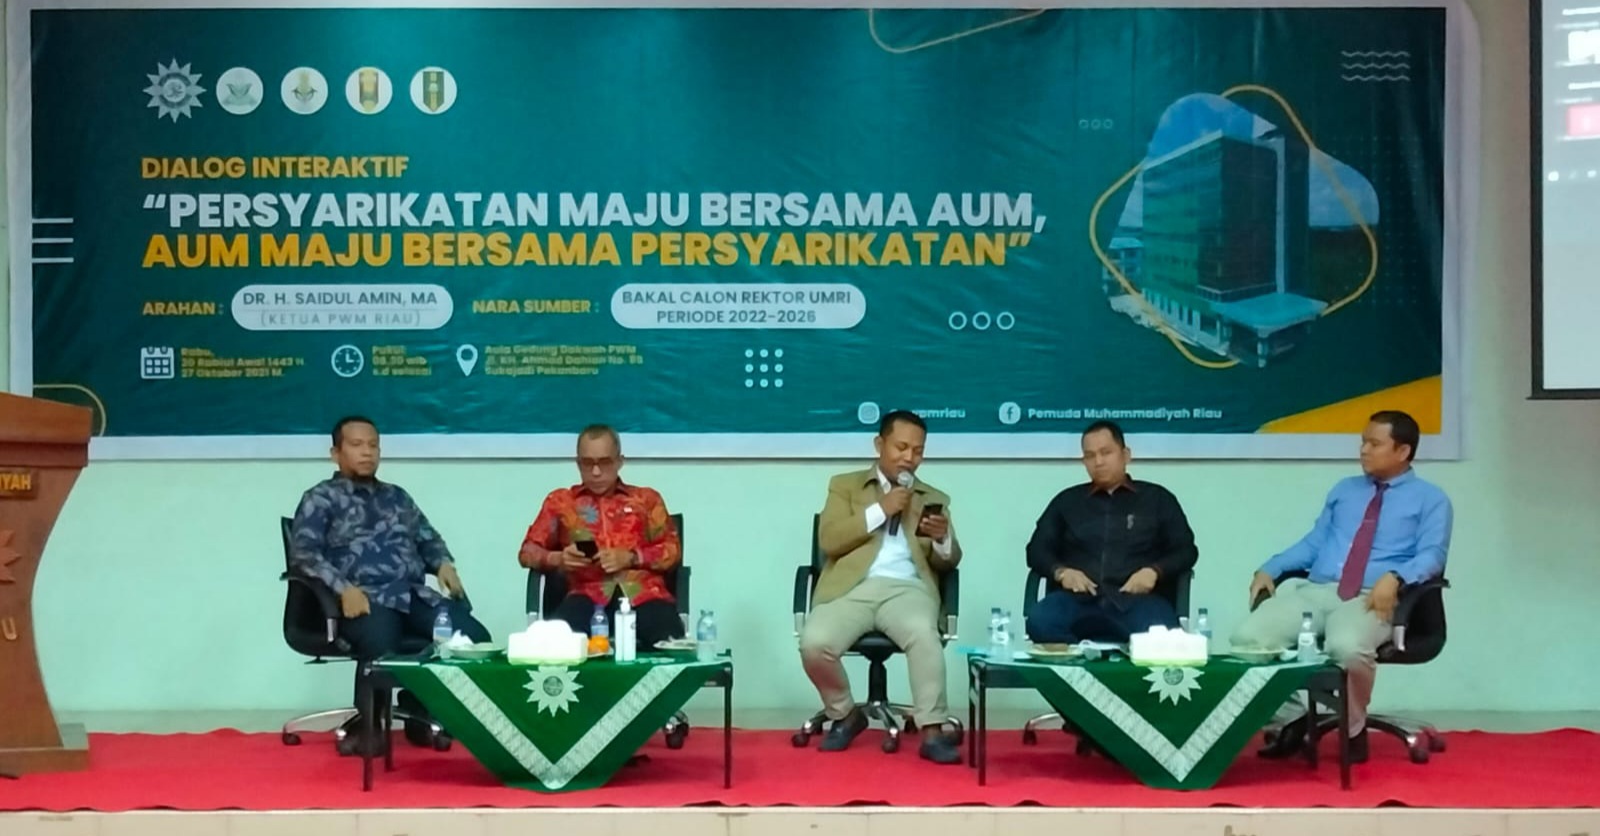 PW Pemuda Muhammadiyah Riau Taja Dialog Interaktif Visi Misi Bakal Calon Rektor Umri 2022-2026